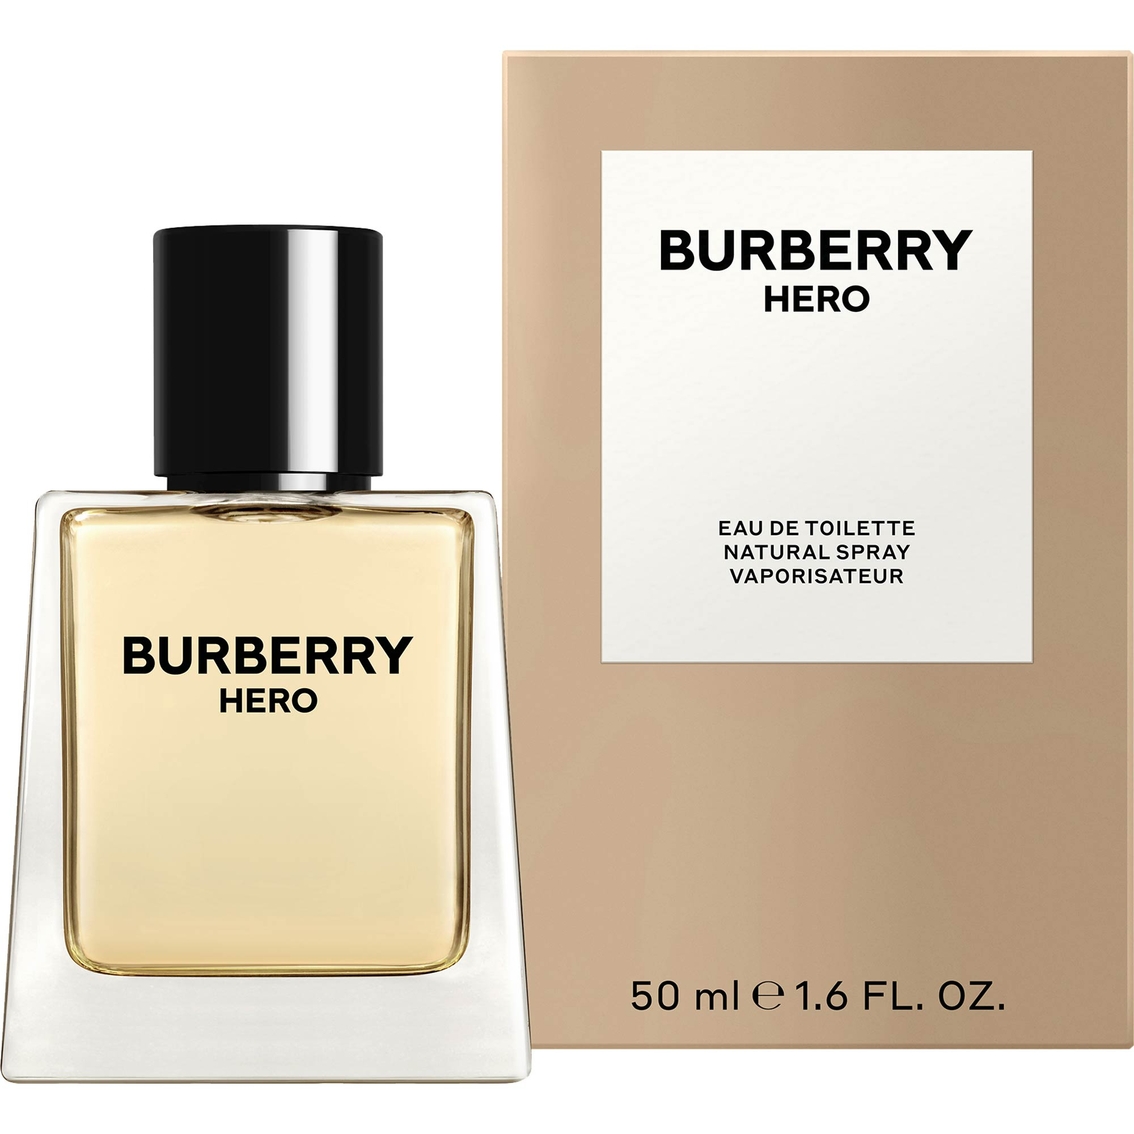 Burberry Hero for Men Eau de Toilette Spray - Image 2 of 3